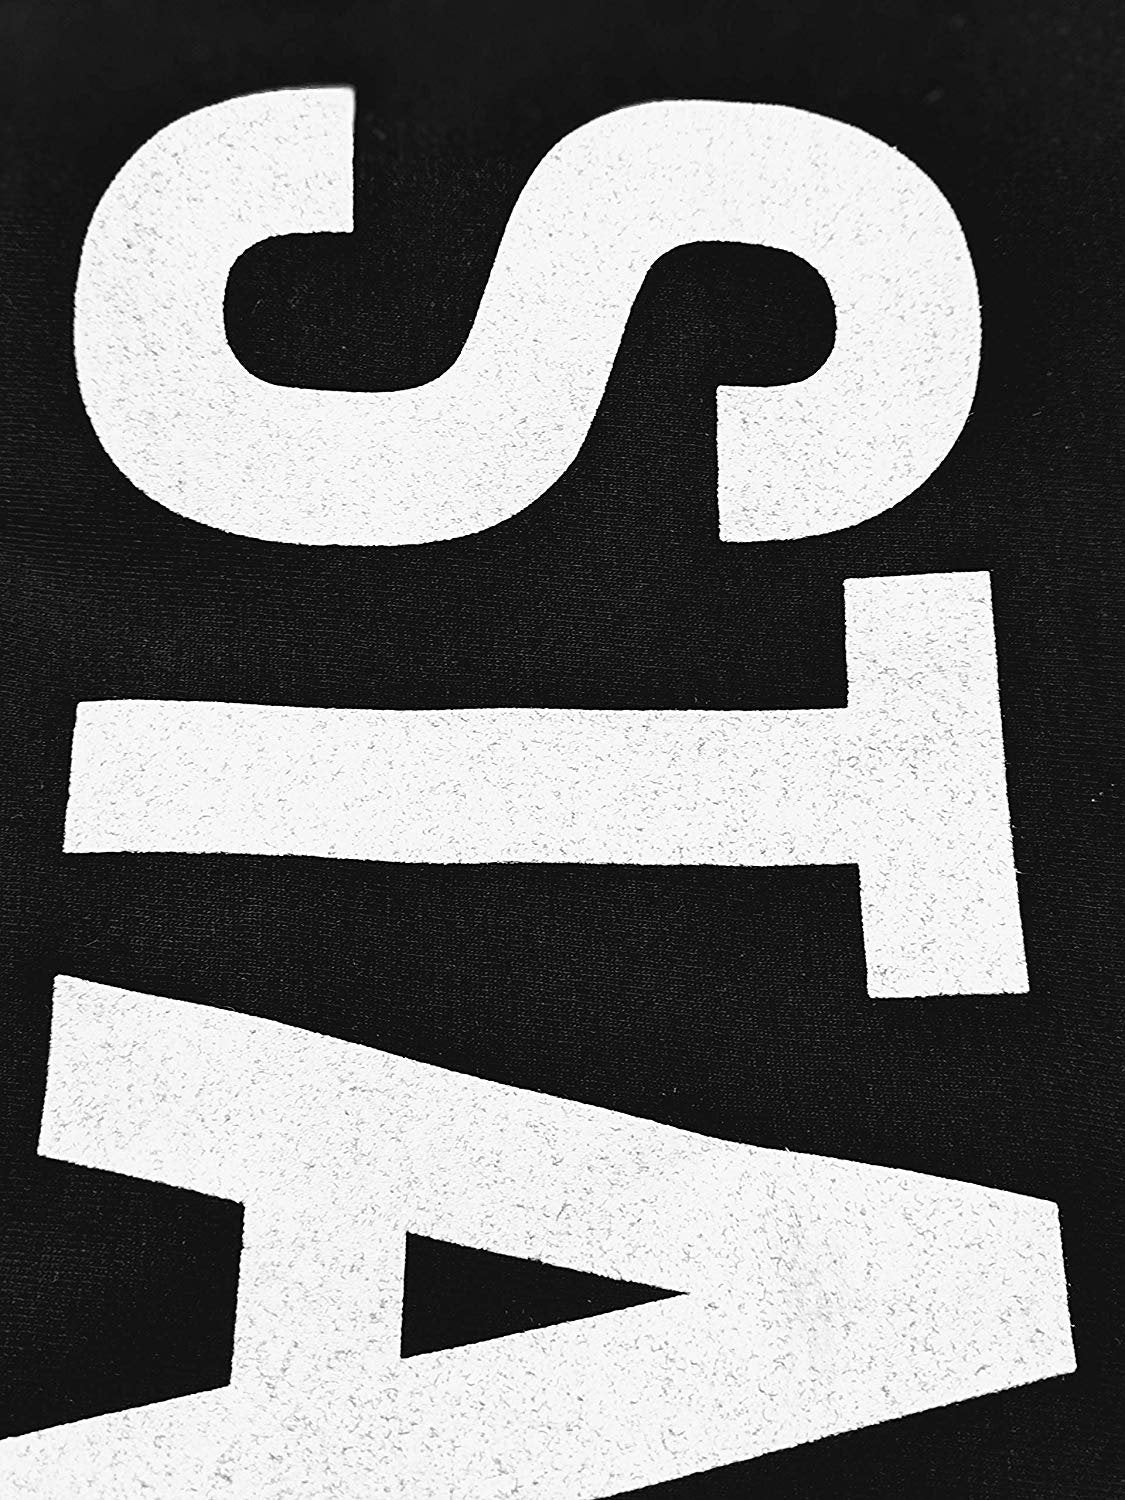 Staff Mens Crewneck Sweatshirt Screen Printed USA Black & White